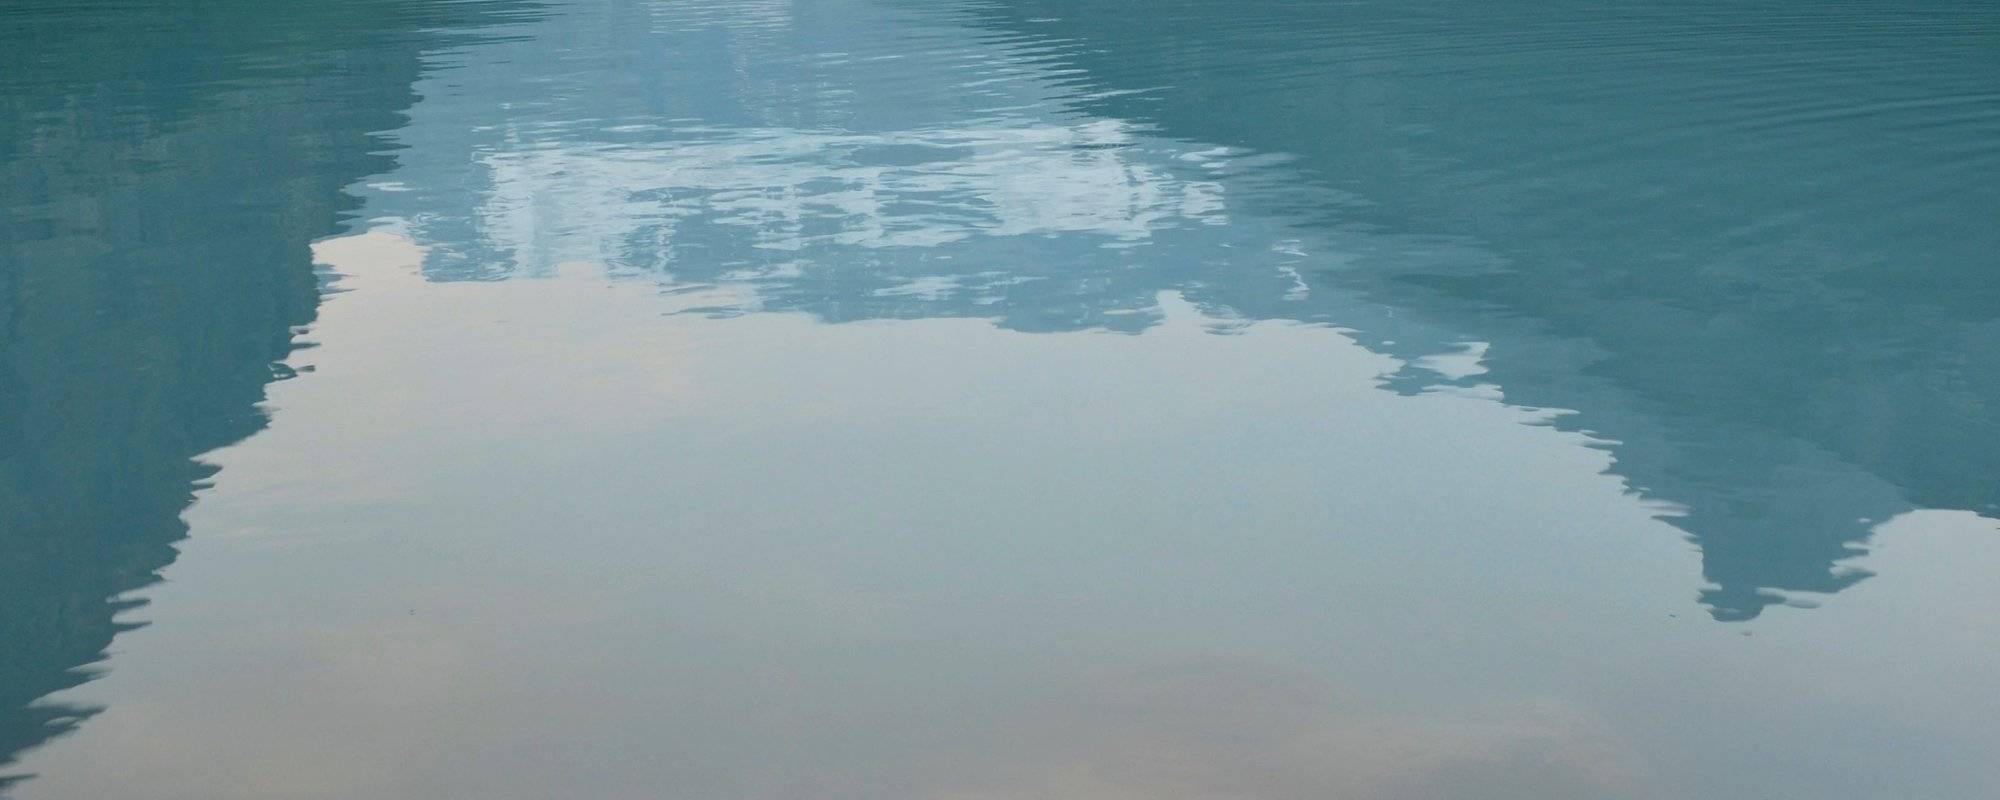 LAKE MORAINE, A SURREAL BEAUTY IN ALBERTA, CANADA